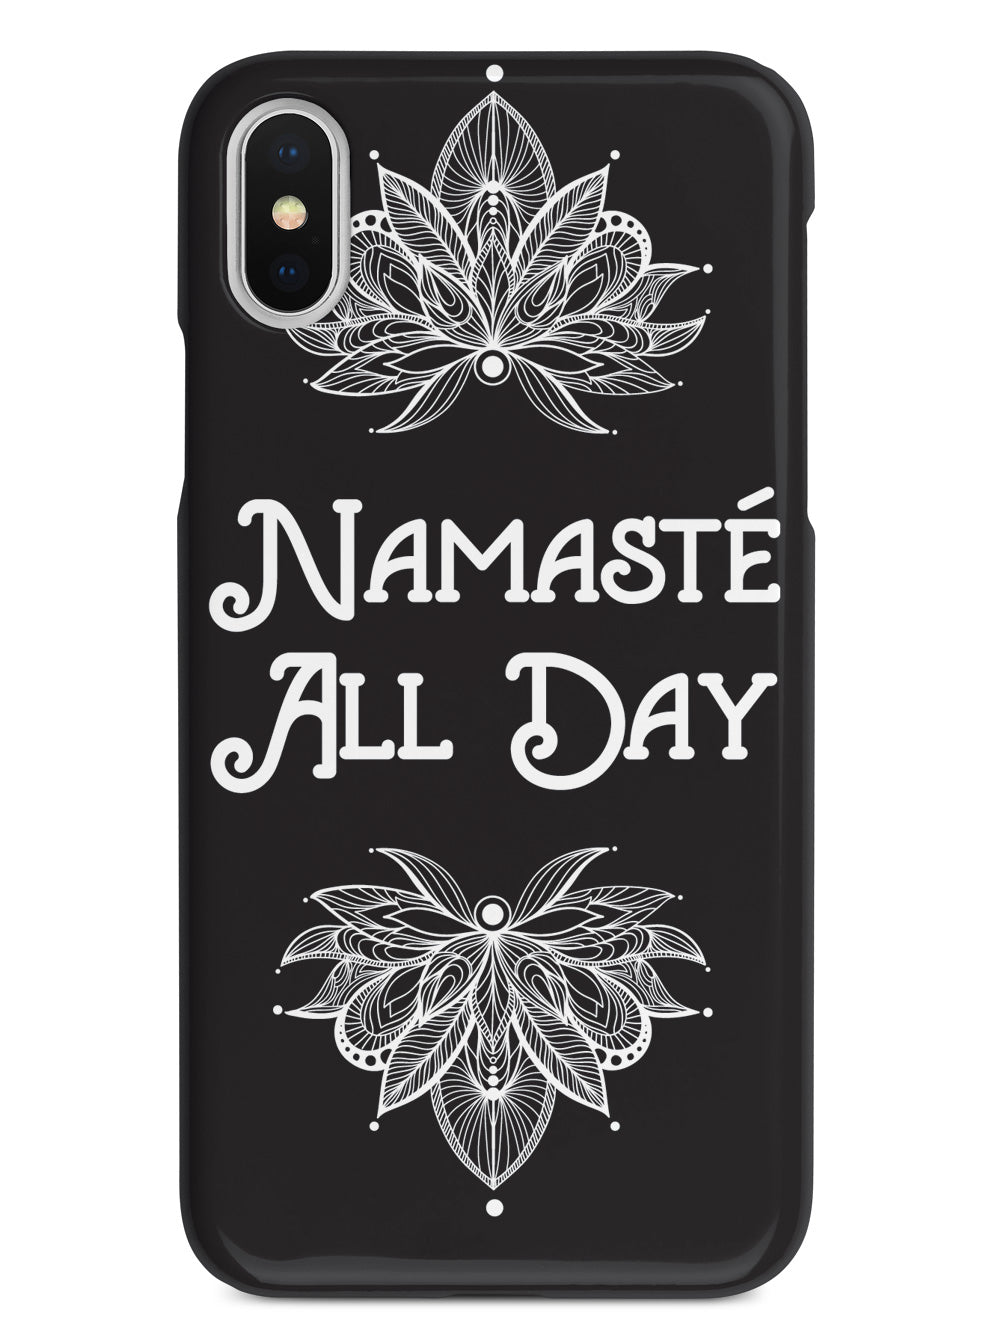 Namaste All Day Case